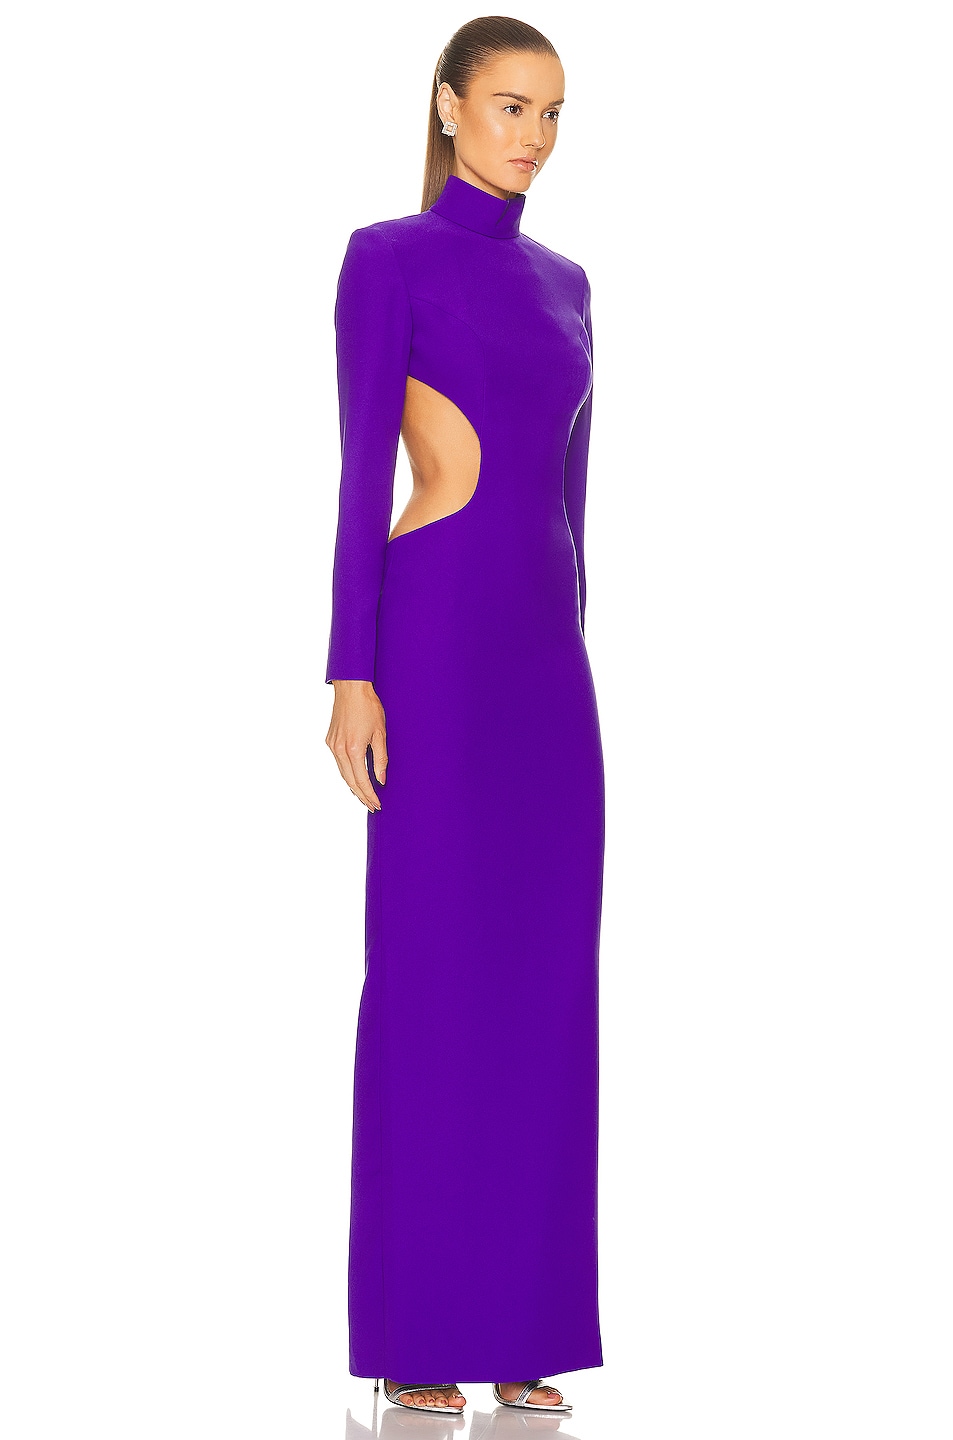 MONOT Backless Maxi Dress in Purple | FWRD